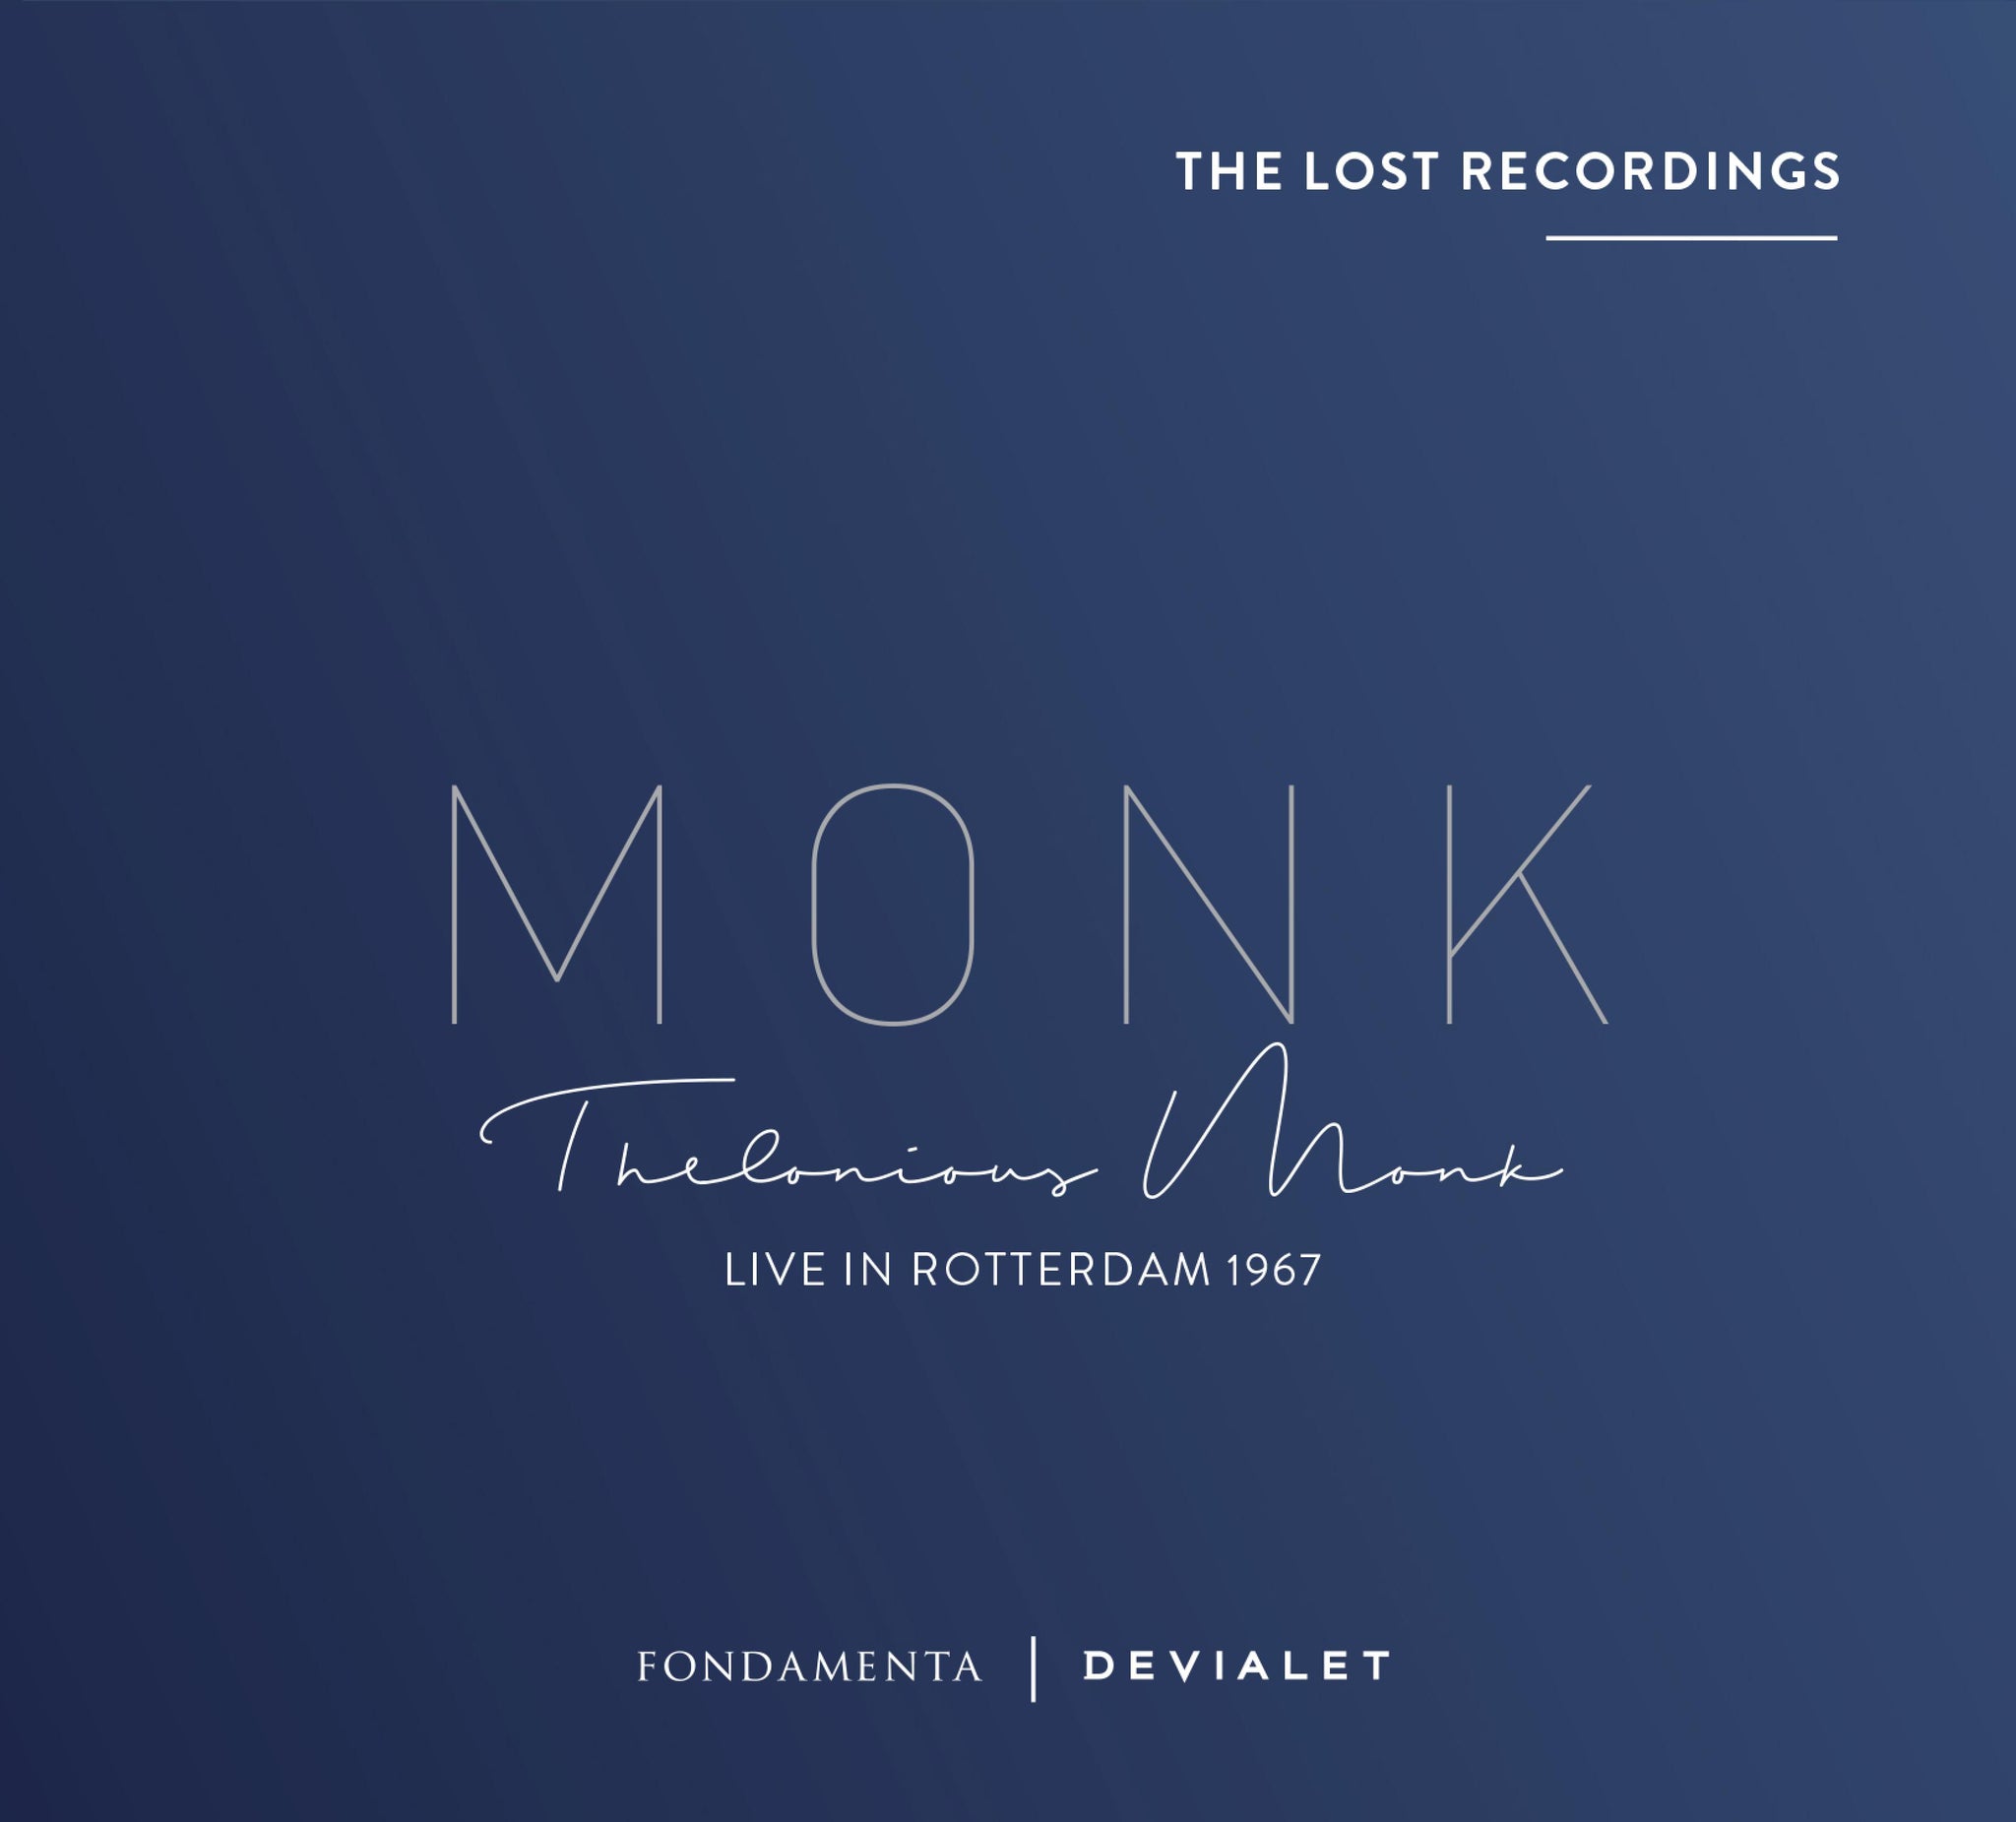 Live at Rotterdam 1967 / Thelonious Monk